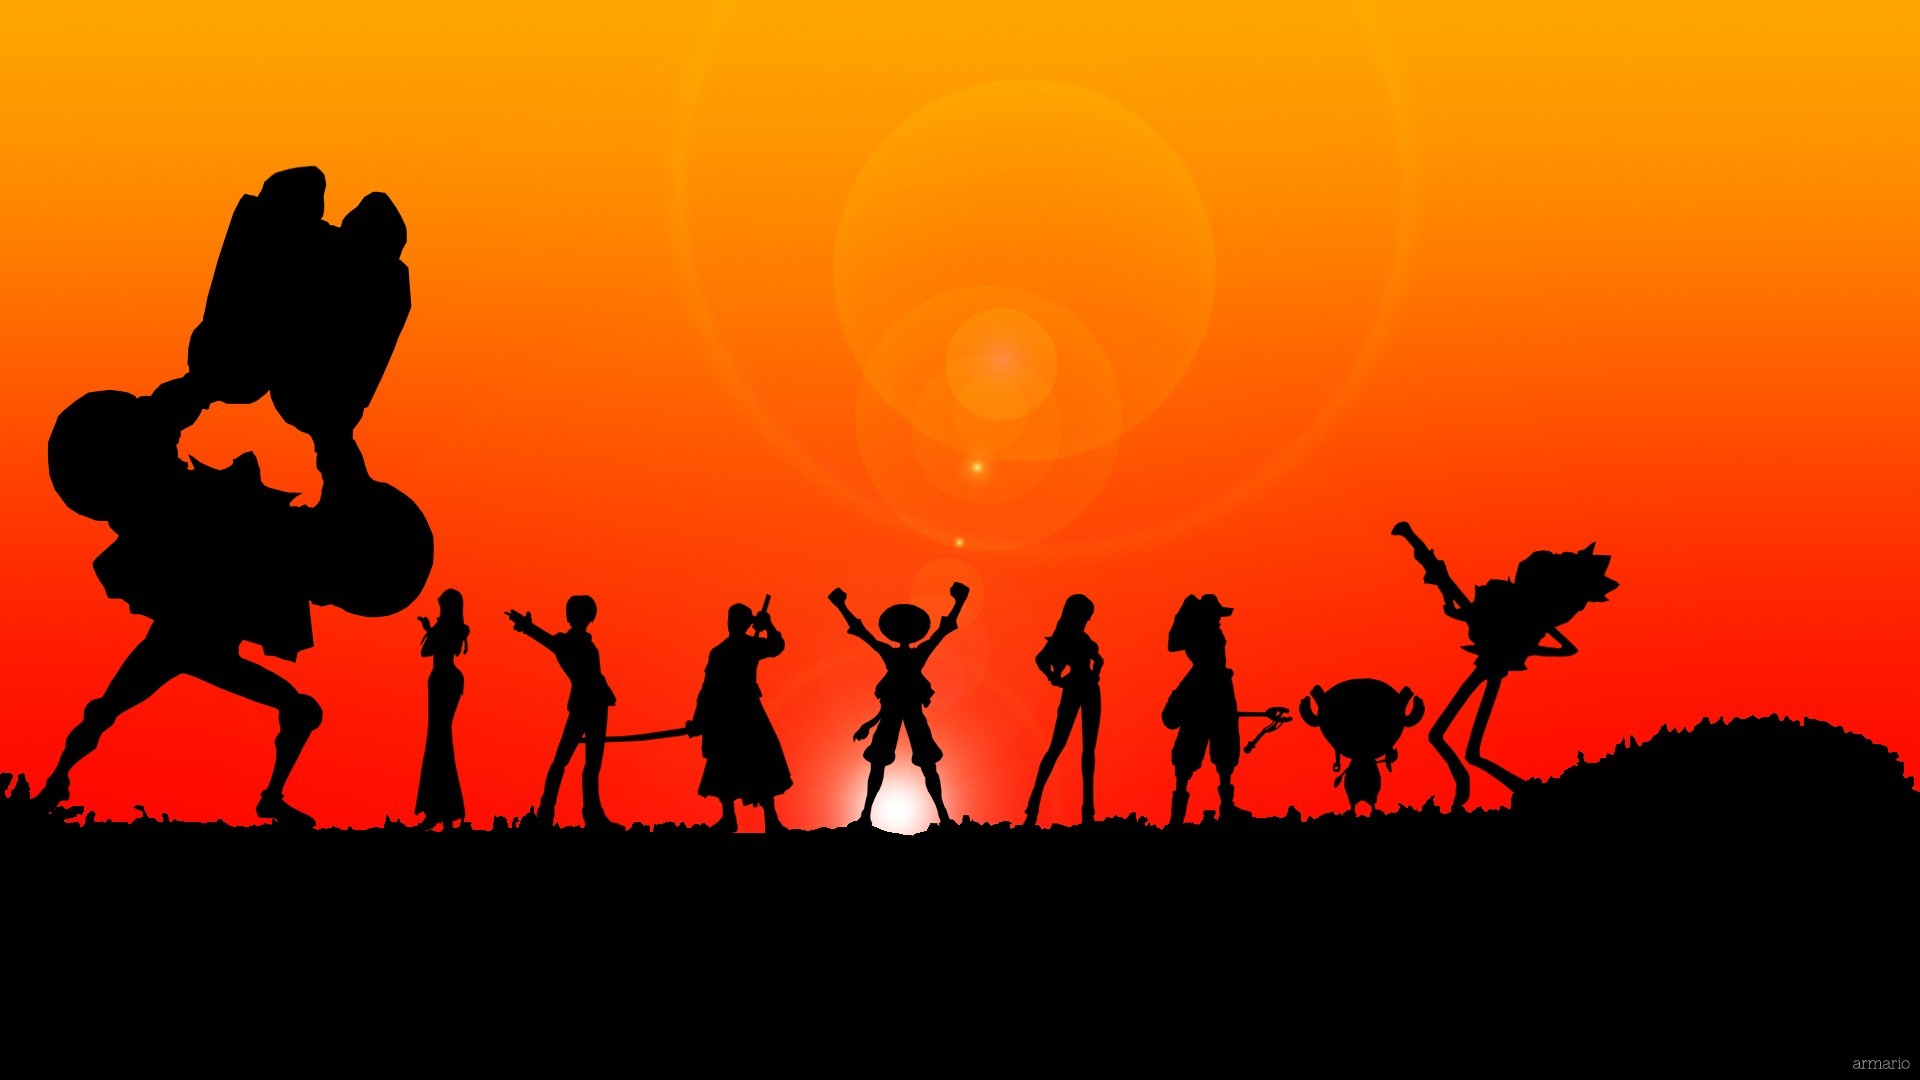 Anime 1920x1080 One Piece anime silhouette orange background sky